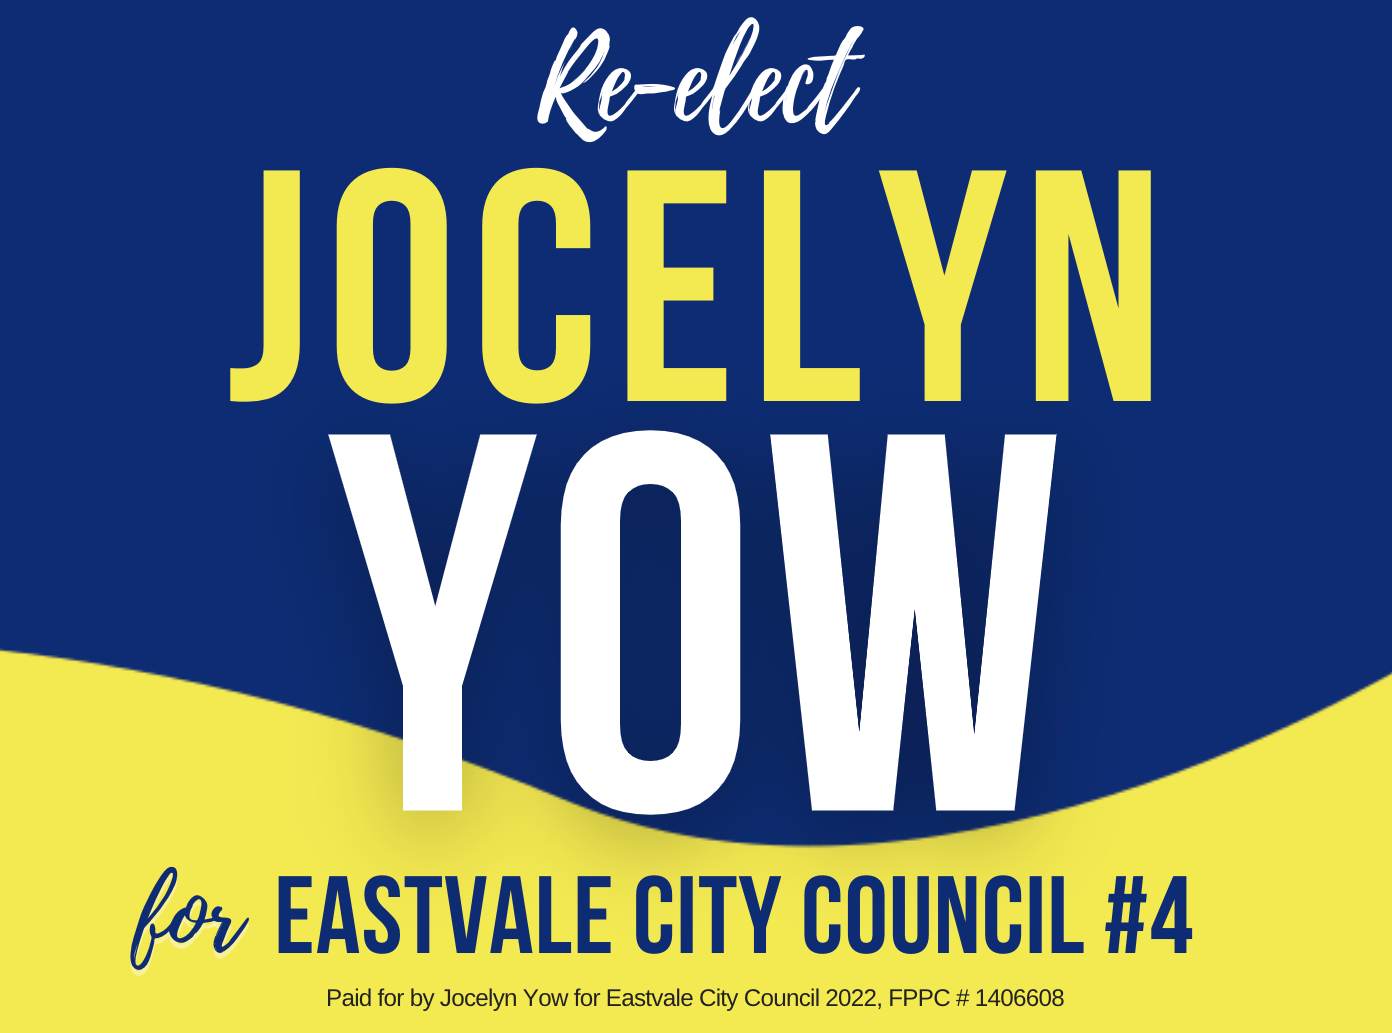 Re-Elect Jocelyn Yow for Eastvale City Council